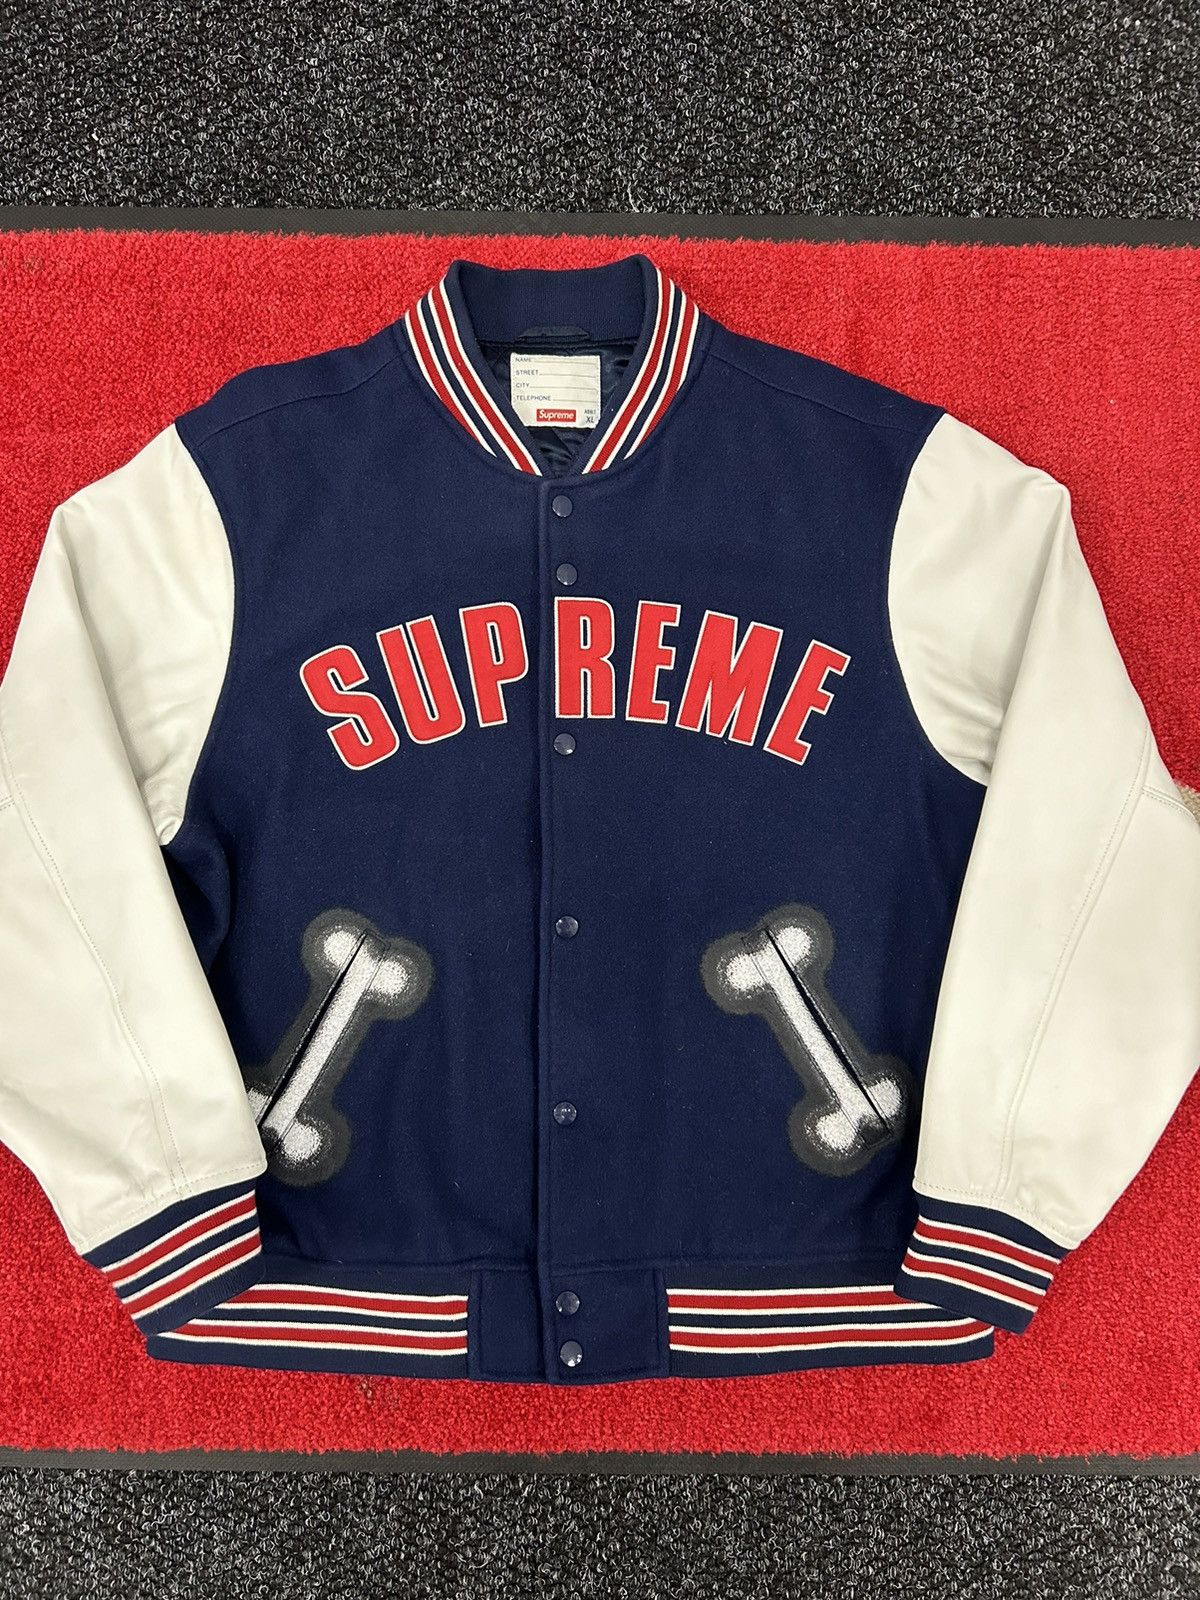 Supreme Supreme Bones Varsity Jacket CHITO | Grailed